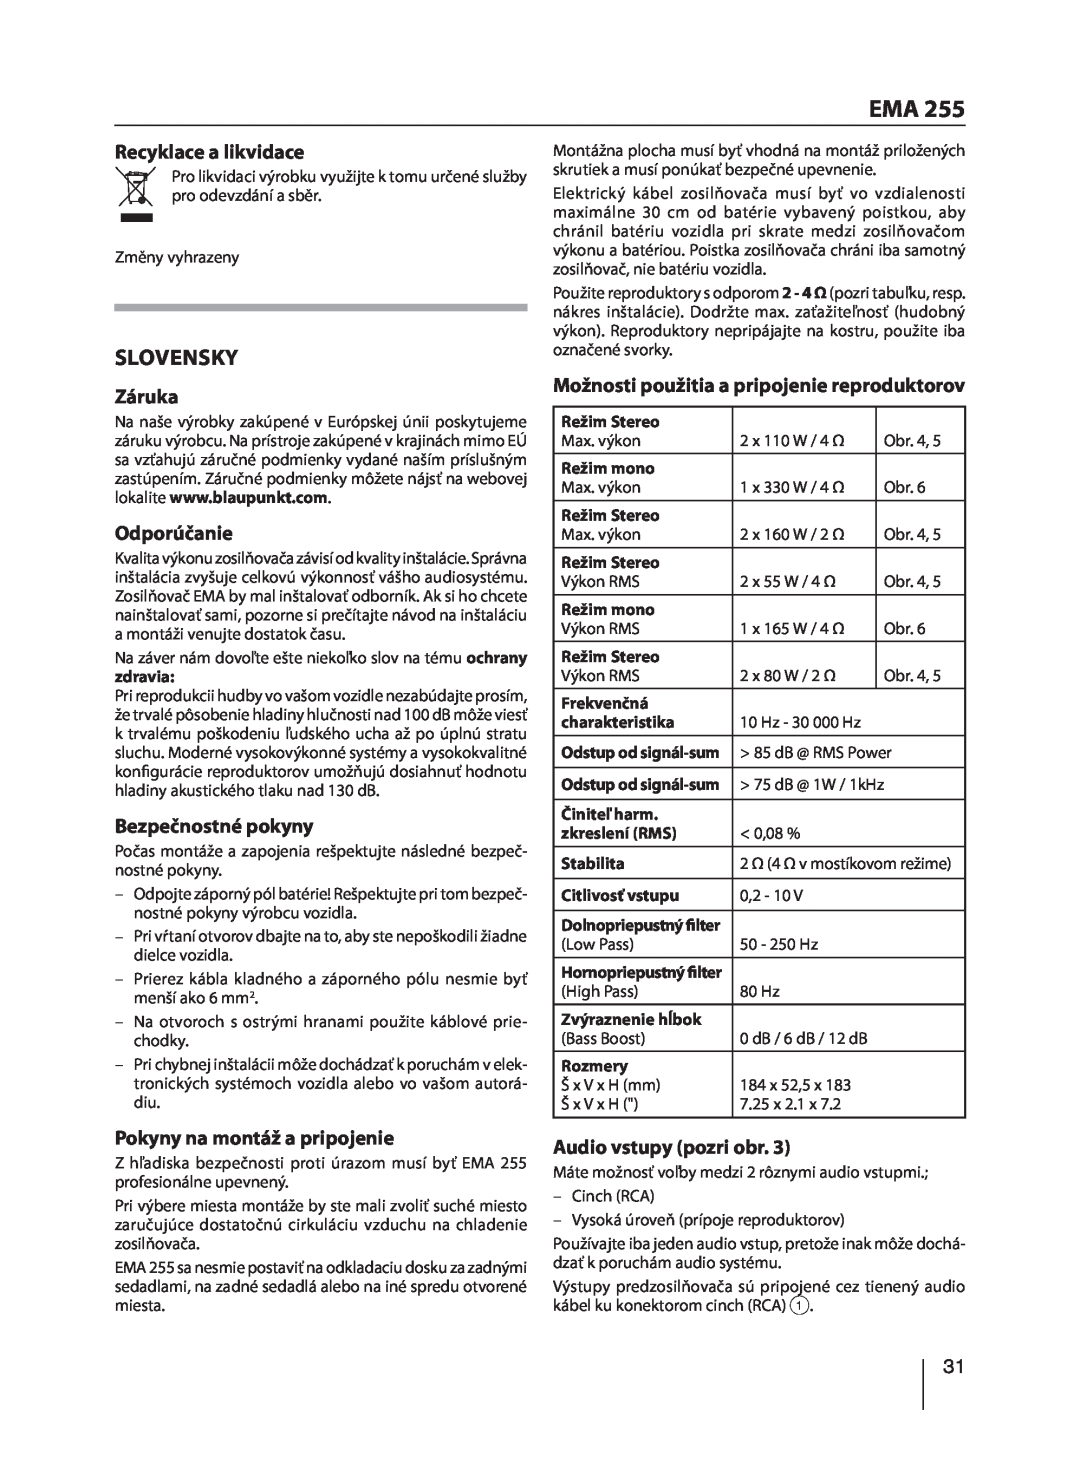 Blaupunkt EMA 255 manual Slovensky, Recyklace a likvidace, Záruka, Odporúčanie, Bezpečnostné pokyny, Audio vstupy pozri obr 